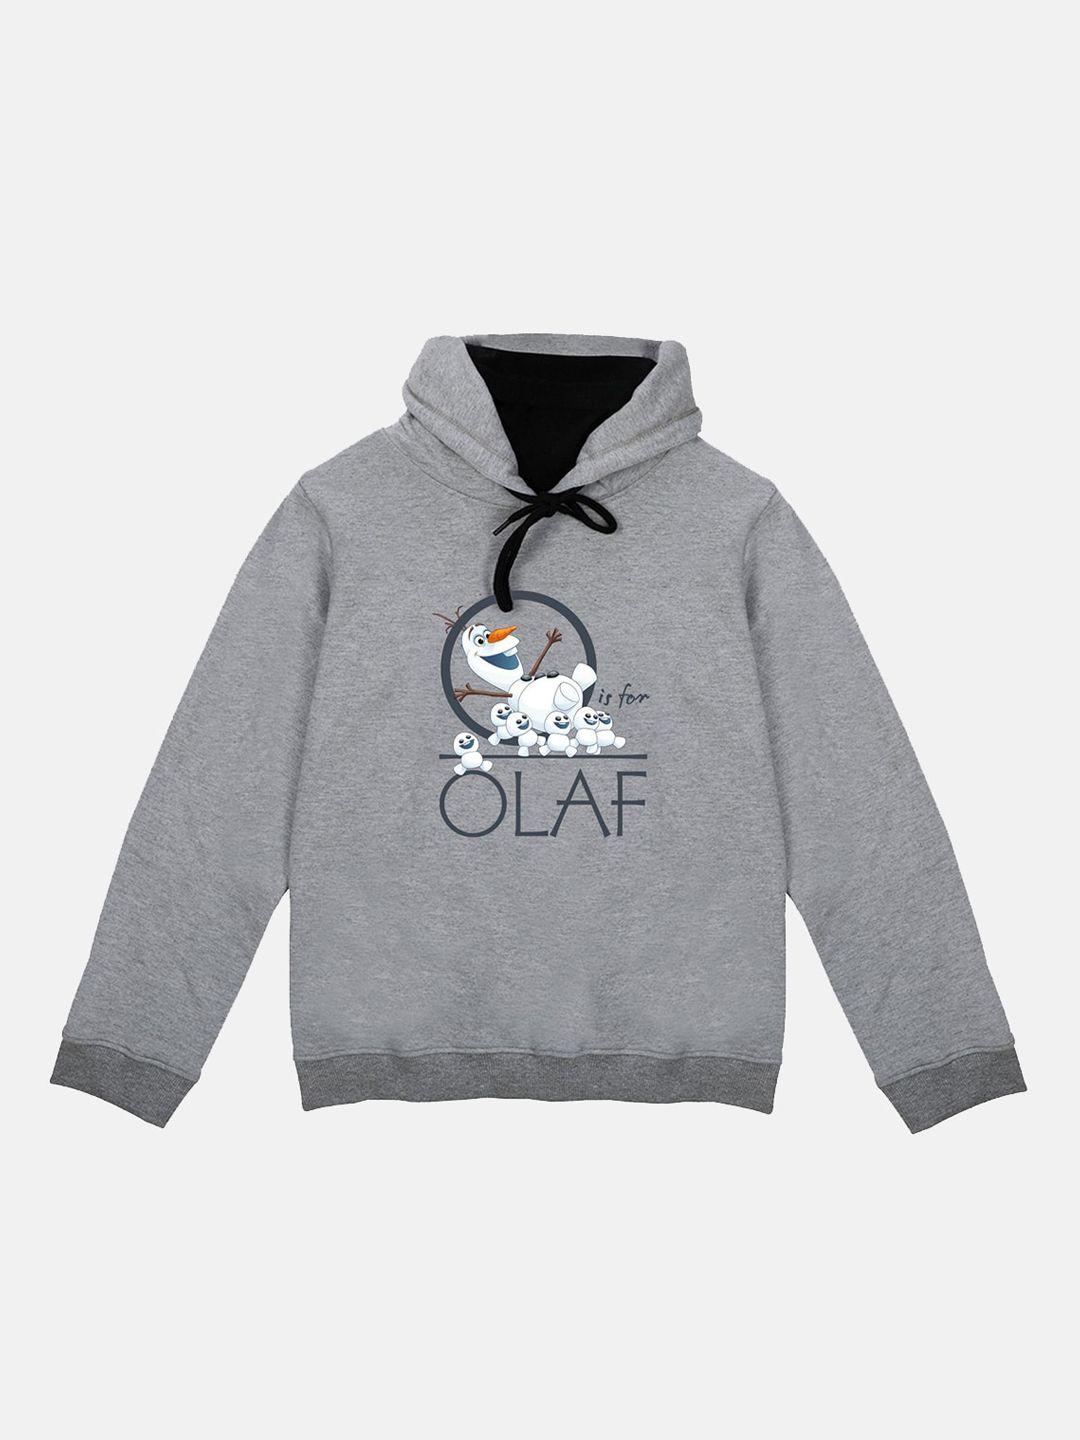 disney by wear your mind kids grey & white olaf printed hooded sweatshirt